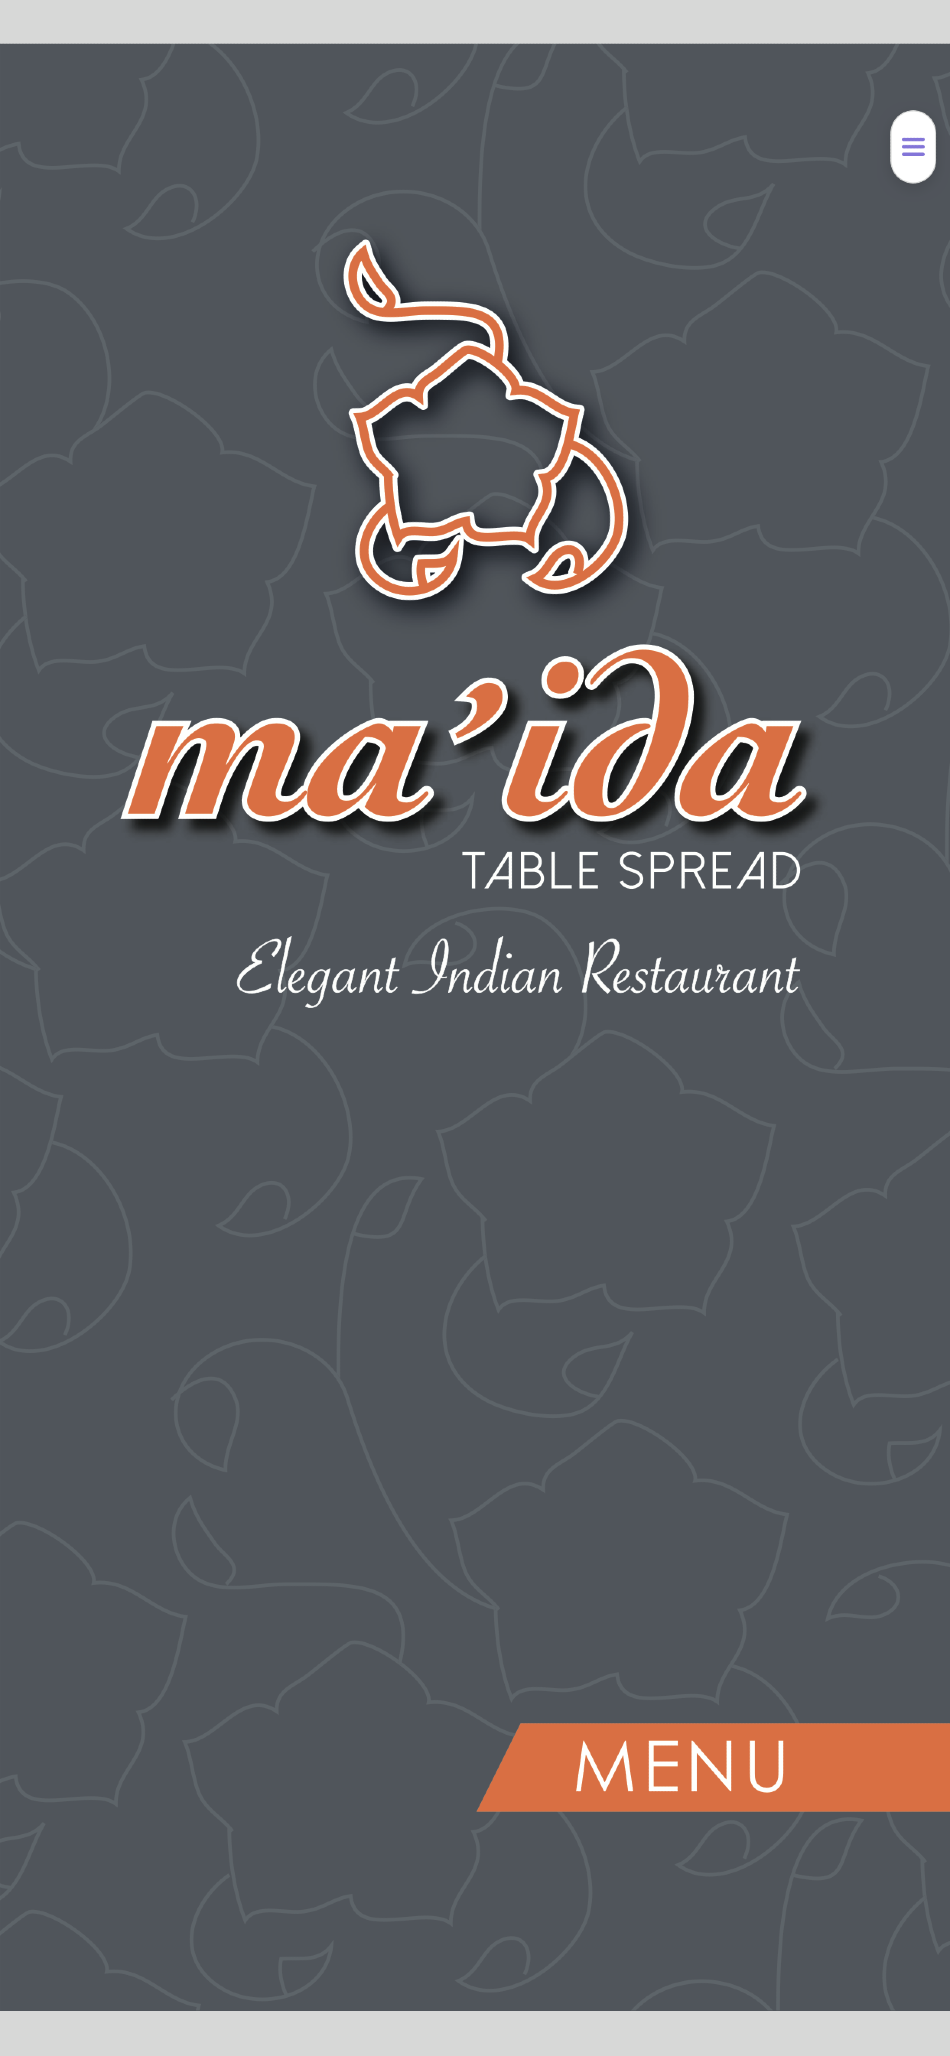 Takeaway Restaurant Menu Page - Ma’ida table spread Indian restaurant - Newcastle upon Tyne